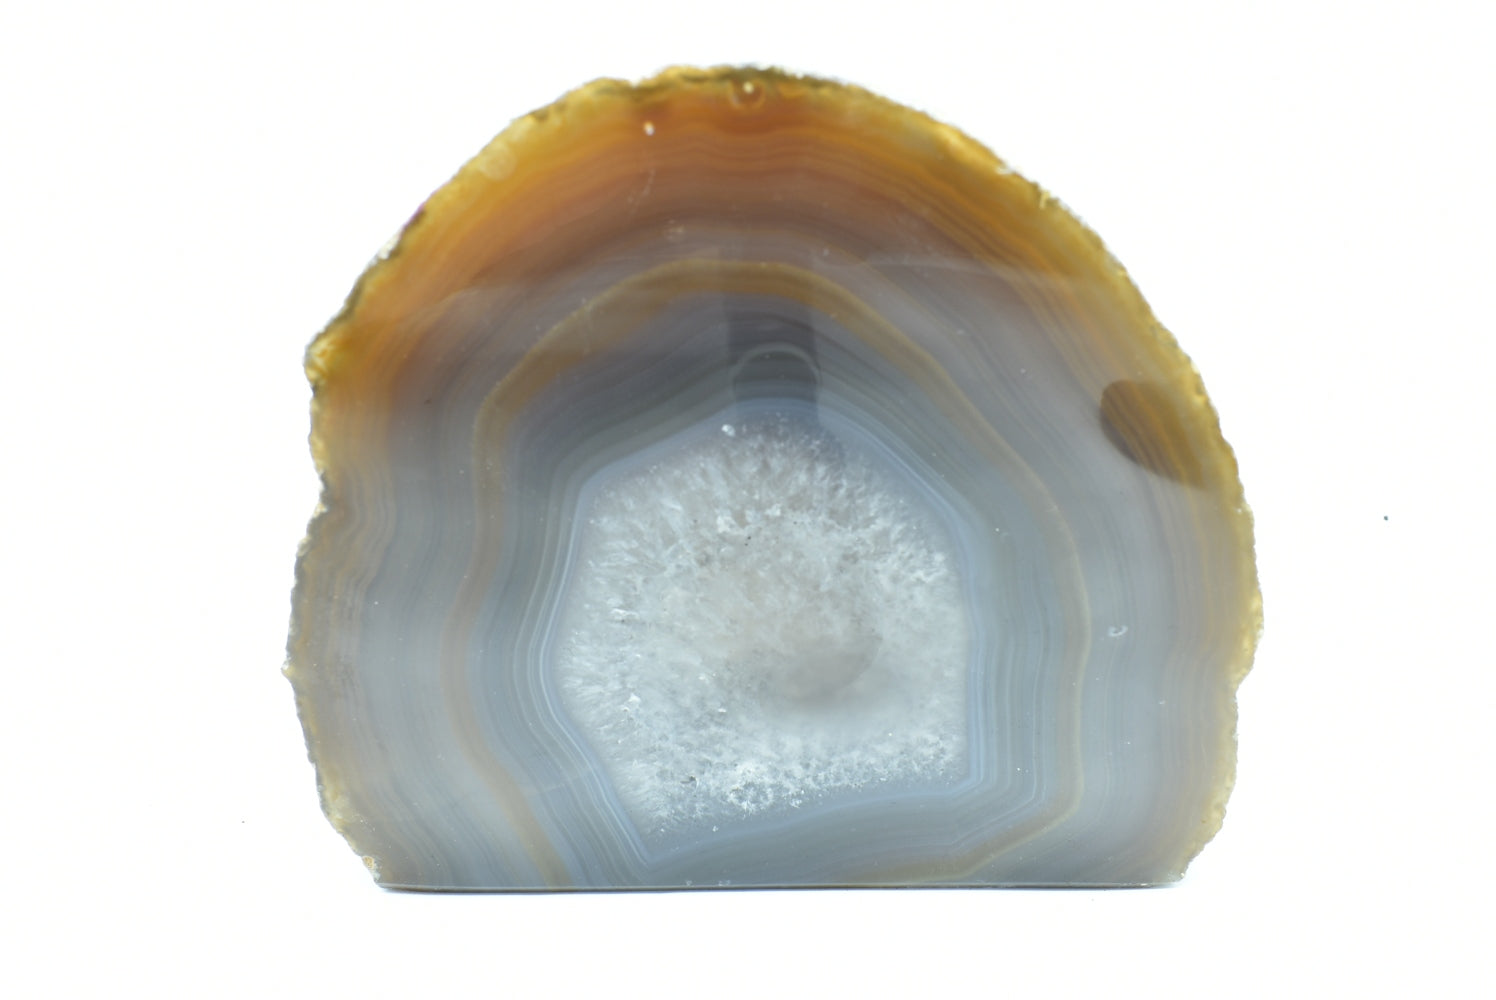 Geode of Agata